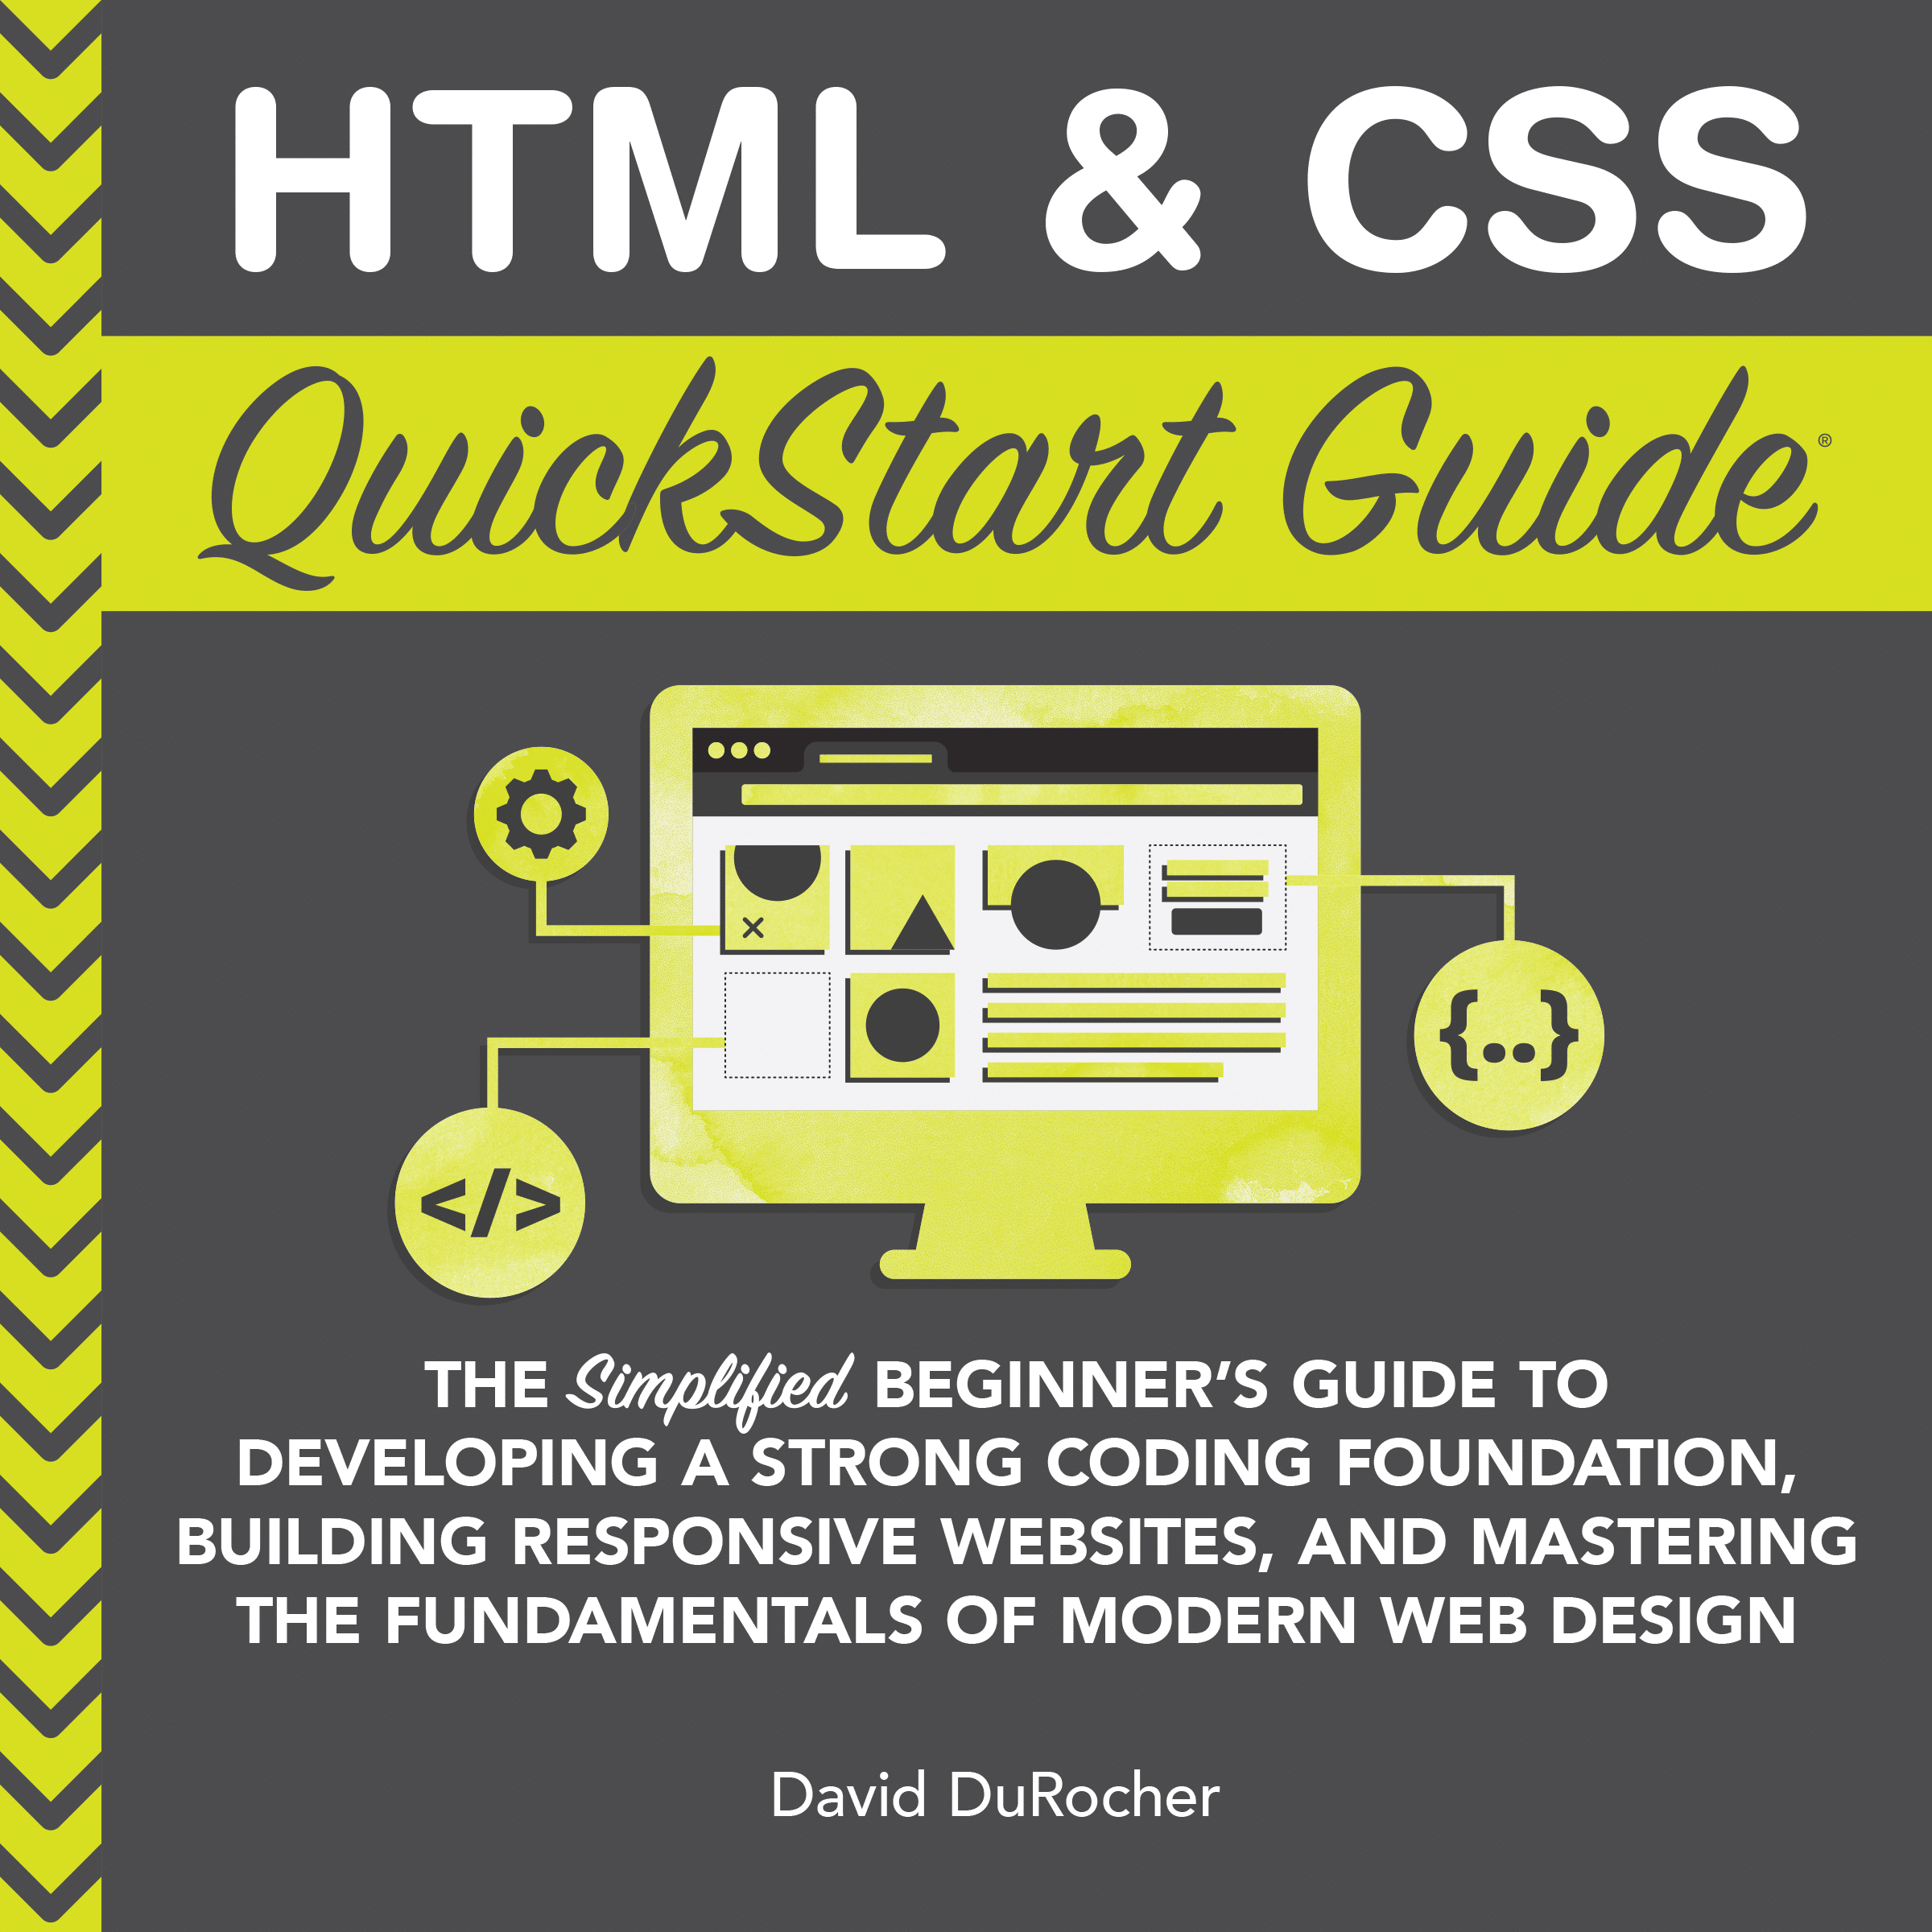 HTML & CSS QuickStart Guide Audiobook Cover